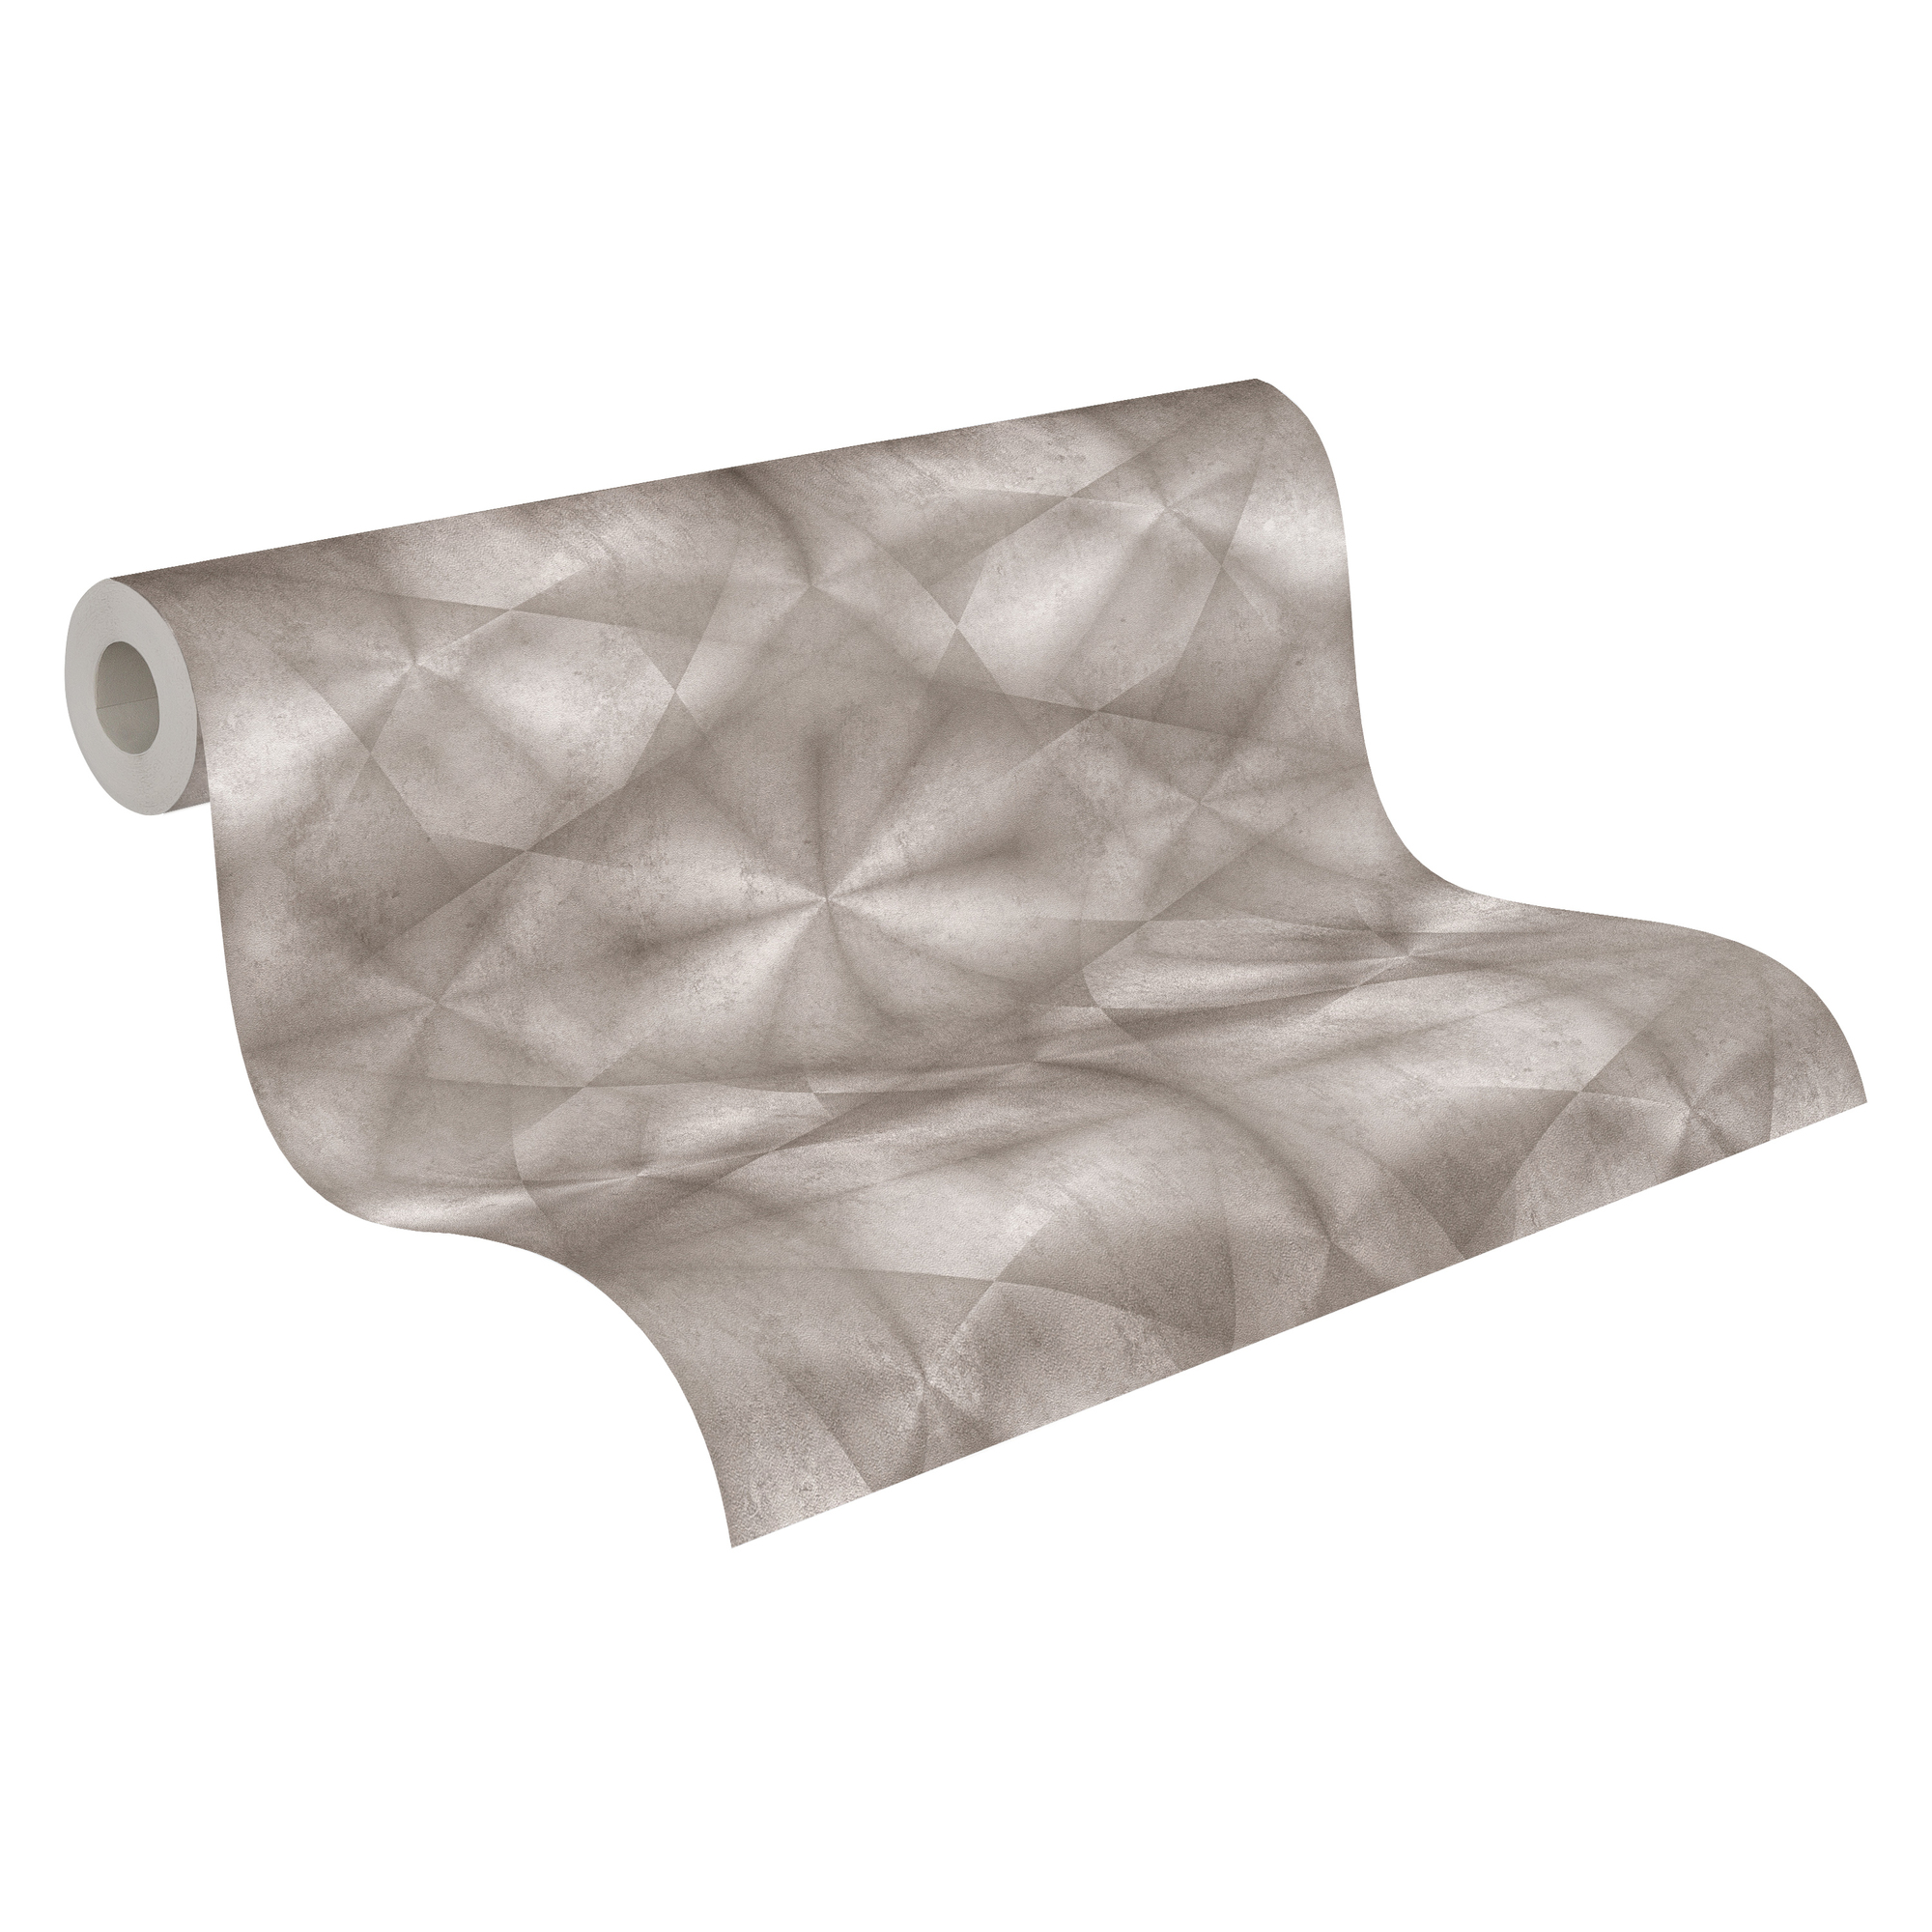 Vliestapete 'My Home. My Spa.' Grafik Beton 3D silber 10,05 x 0,53 m + product picture